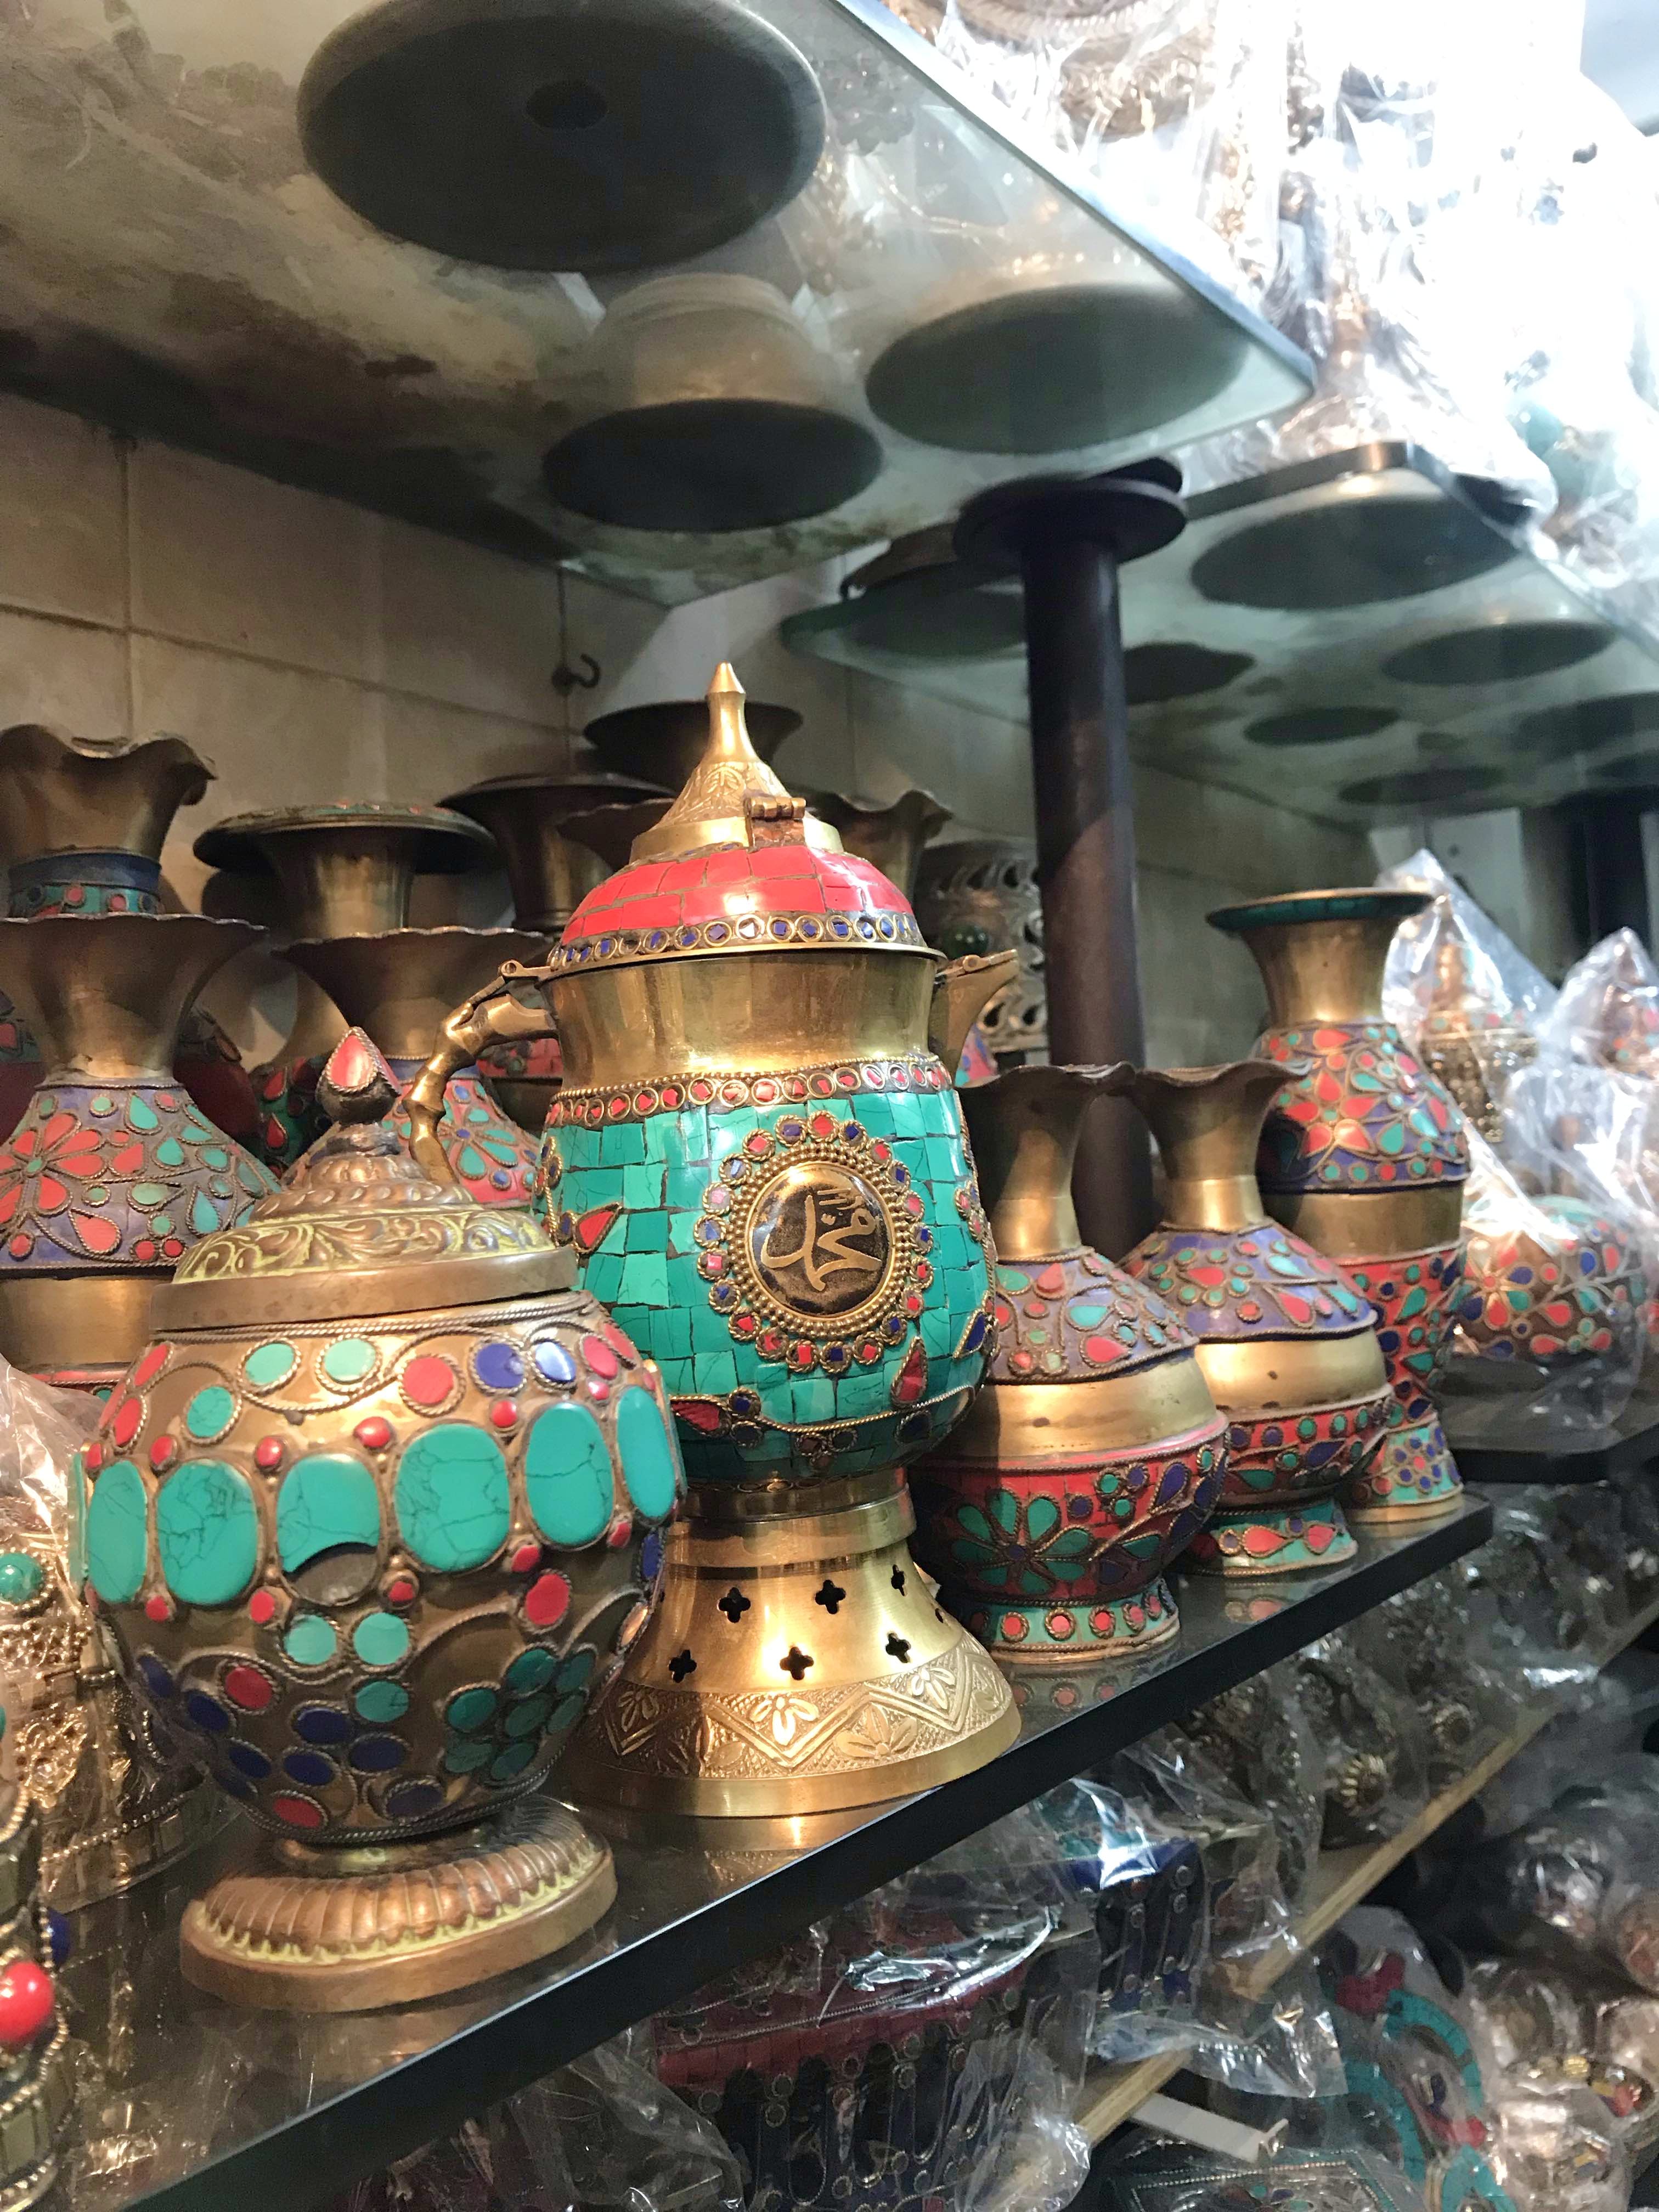 Souvenir,Ceramic,Urn,Collection,Market,Porcelain,Pottery,Artifact,Retail,Collectable